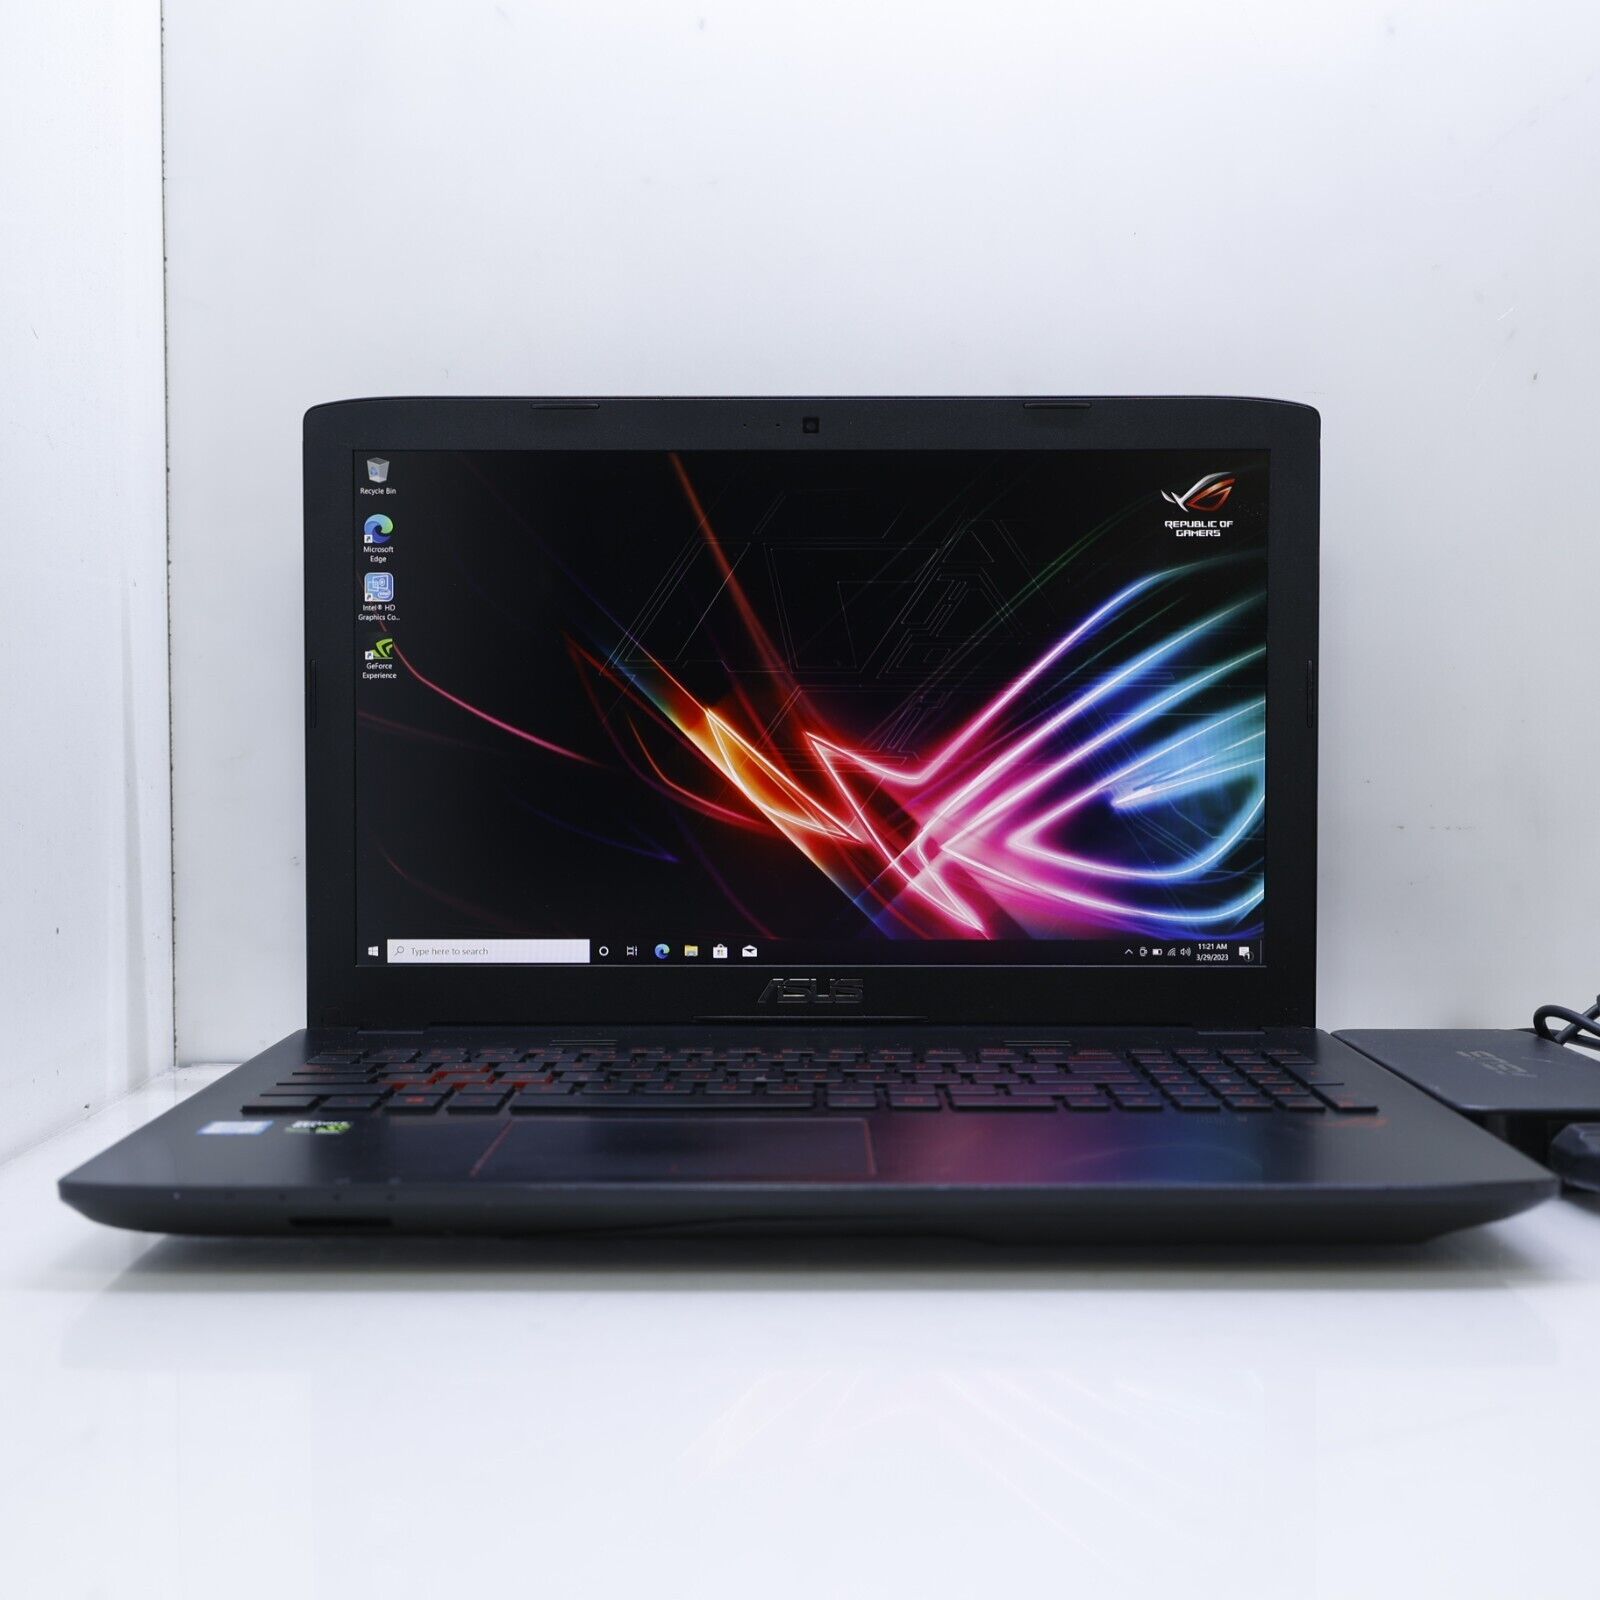 ASUS ROG GL552VW-DH74 Gaming Laptop, 15.6" Intel @ GHz – KenDoTronics